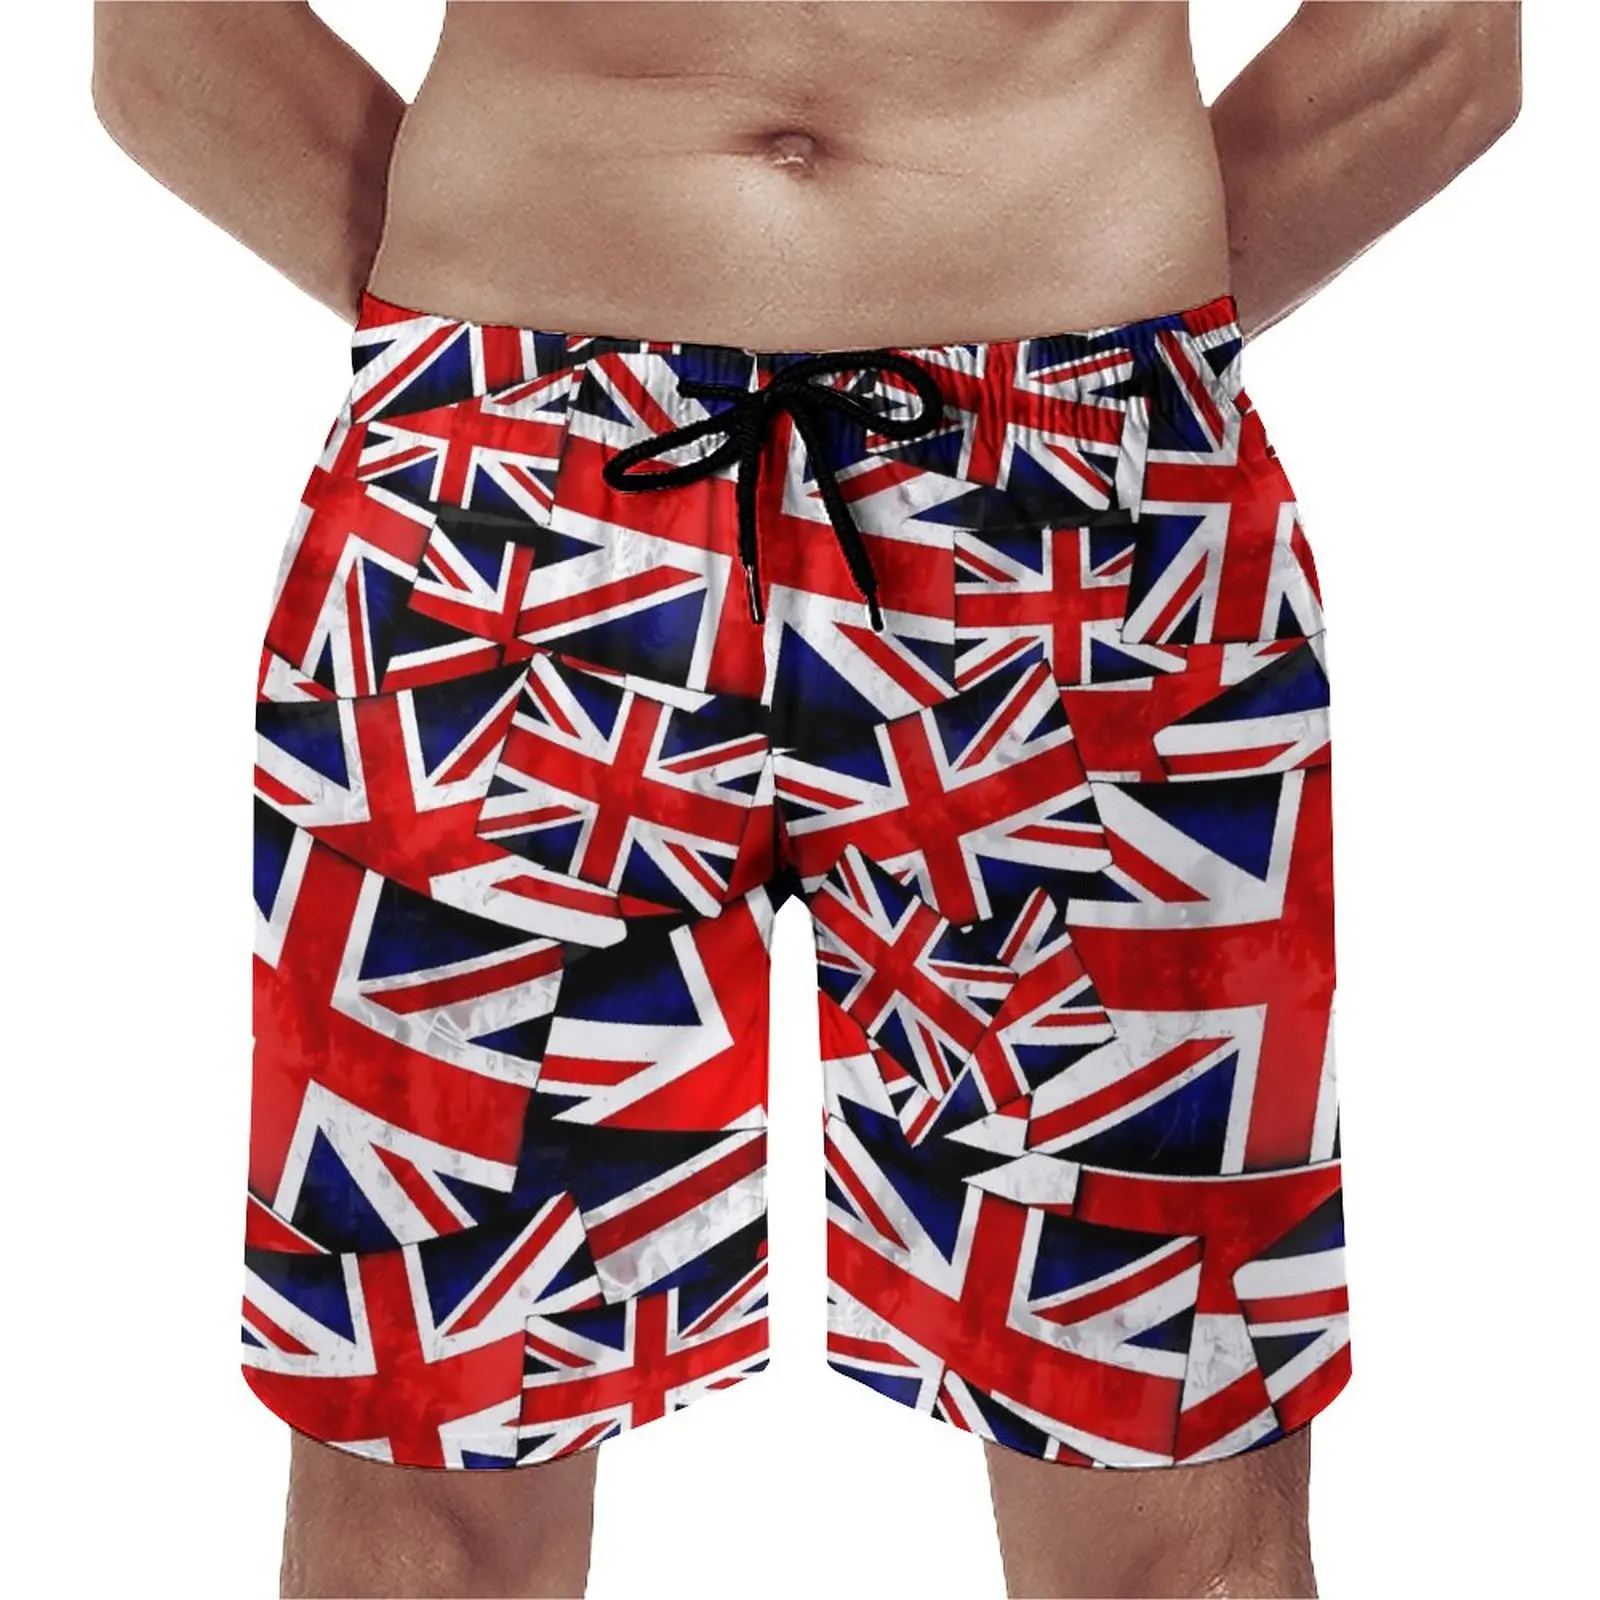 

Summer Gym Shorts British Flag Running Surf England UK Flags Printed Board Short Pants Funny Comfortable Beach Trunks Big Size